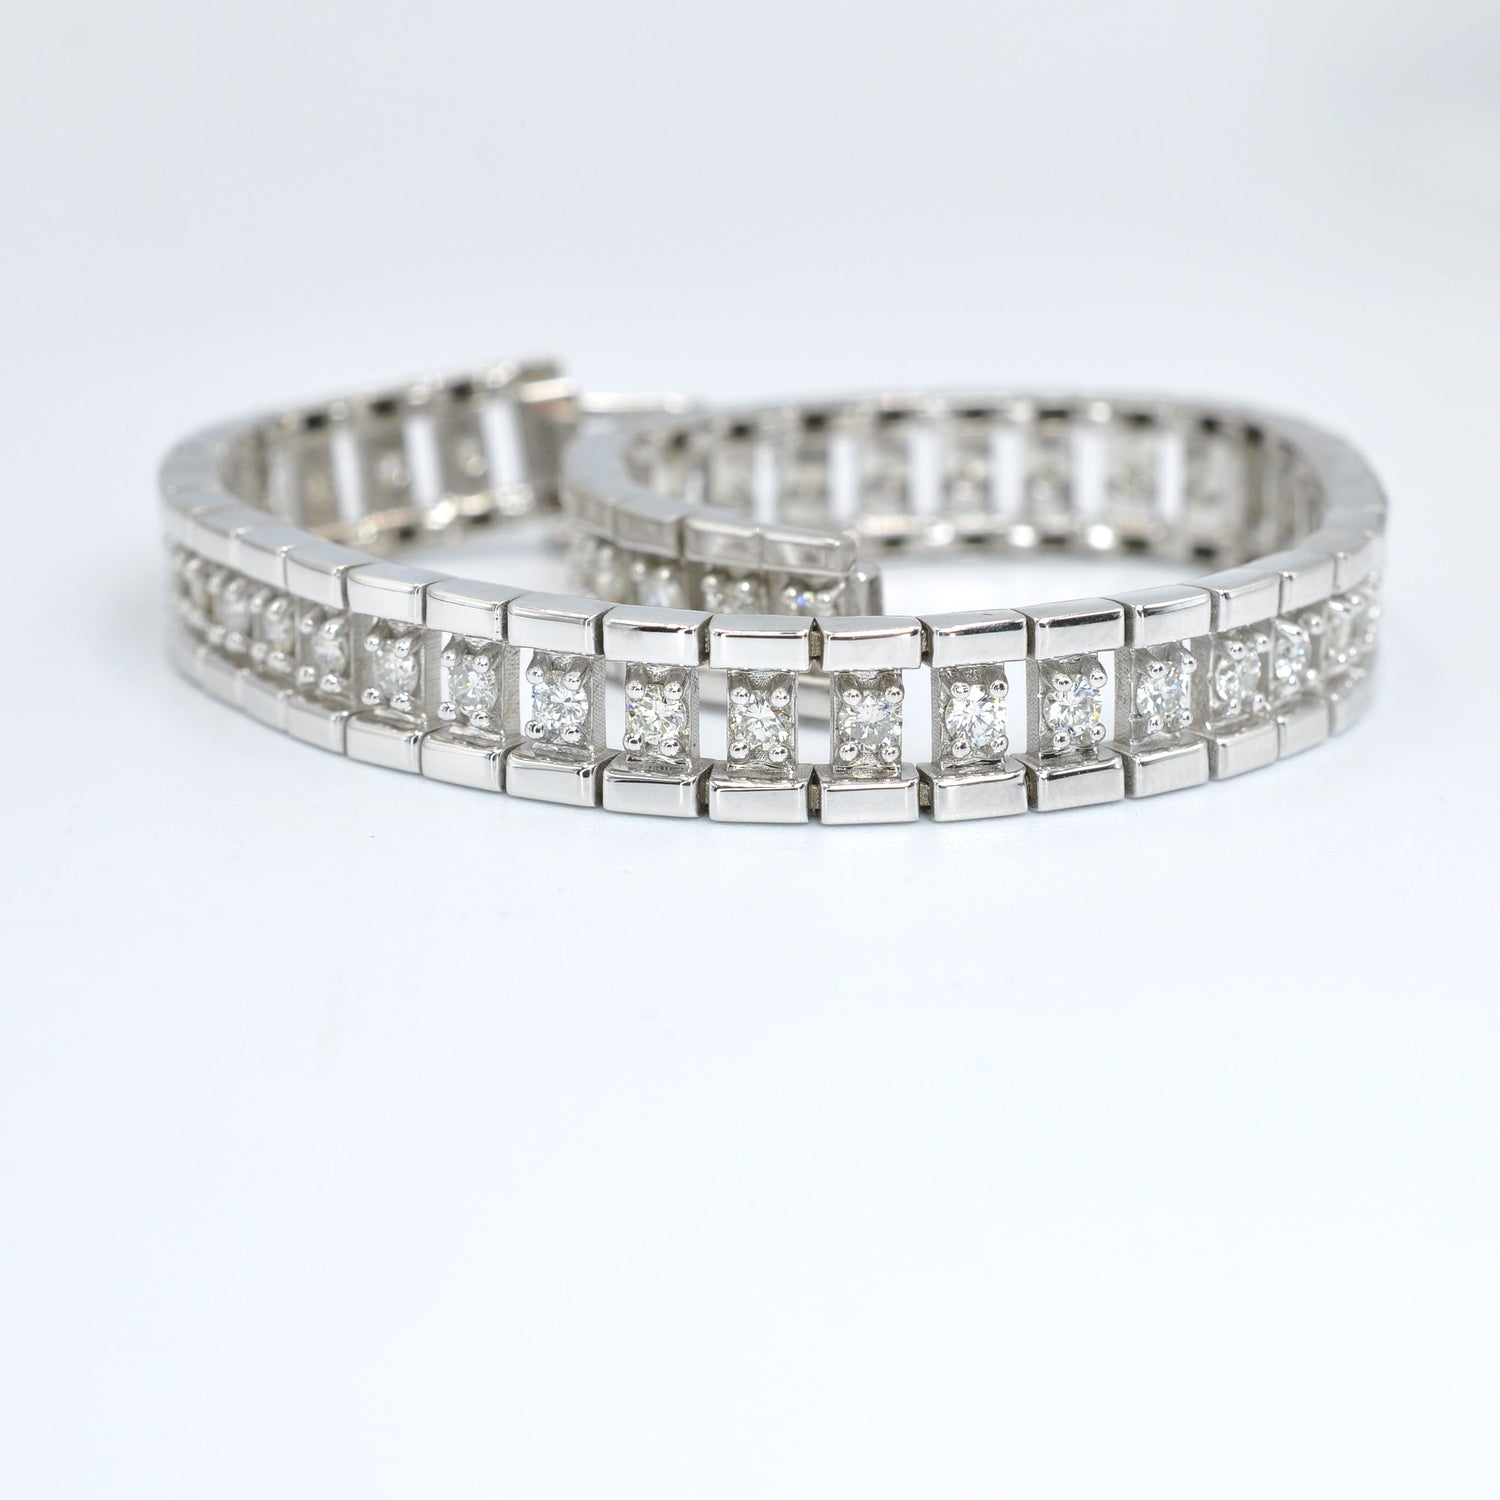 Captivating 2.00 CT Round Cut Diamonds - Diamond Bracelet in 14KT White Gold